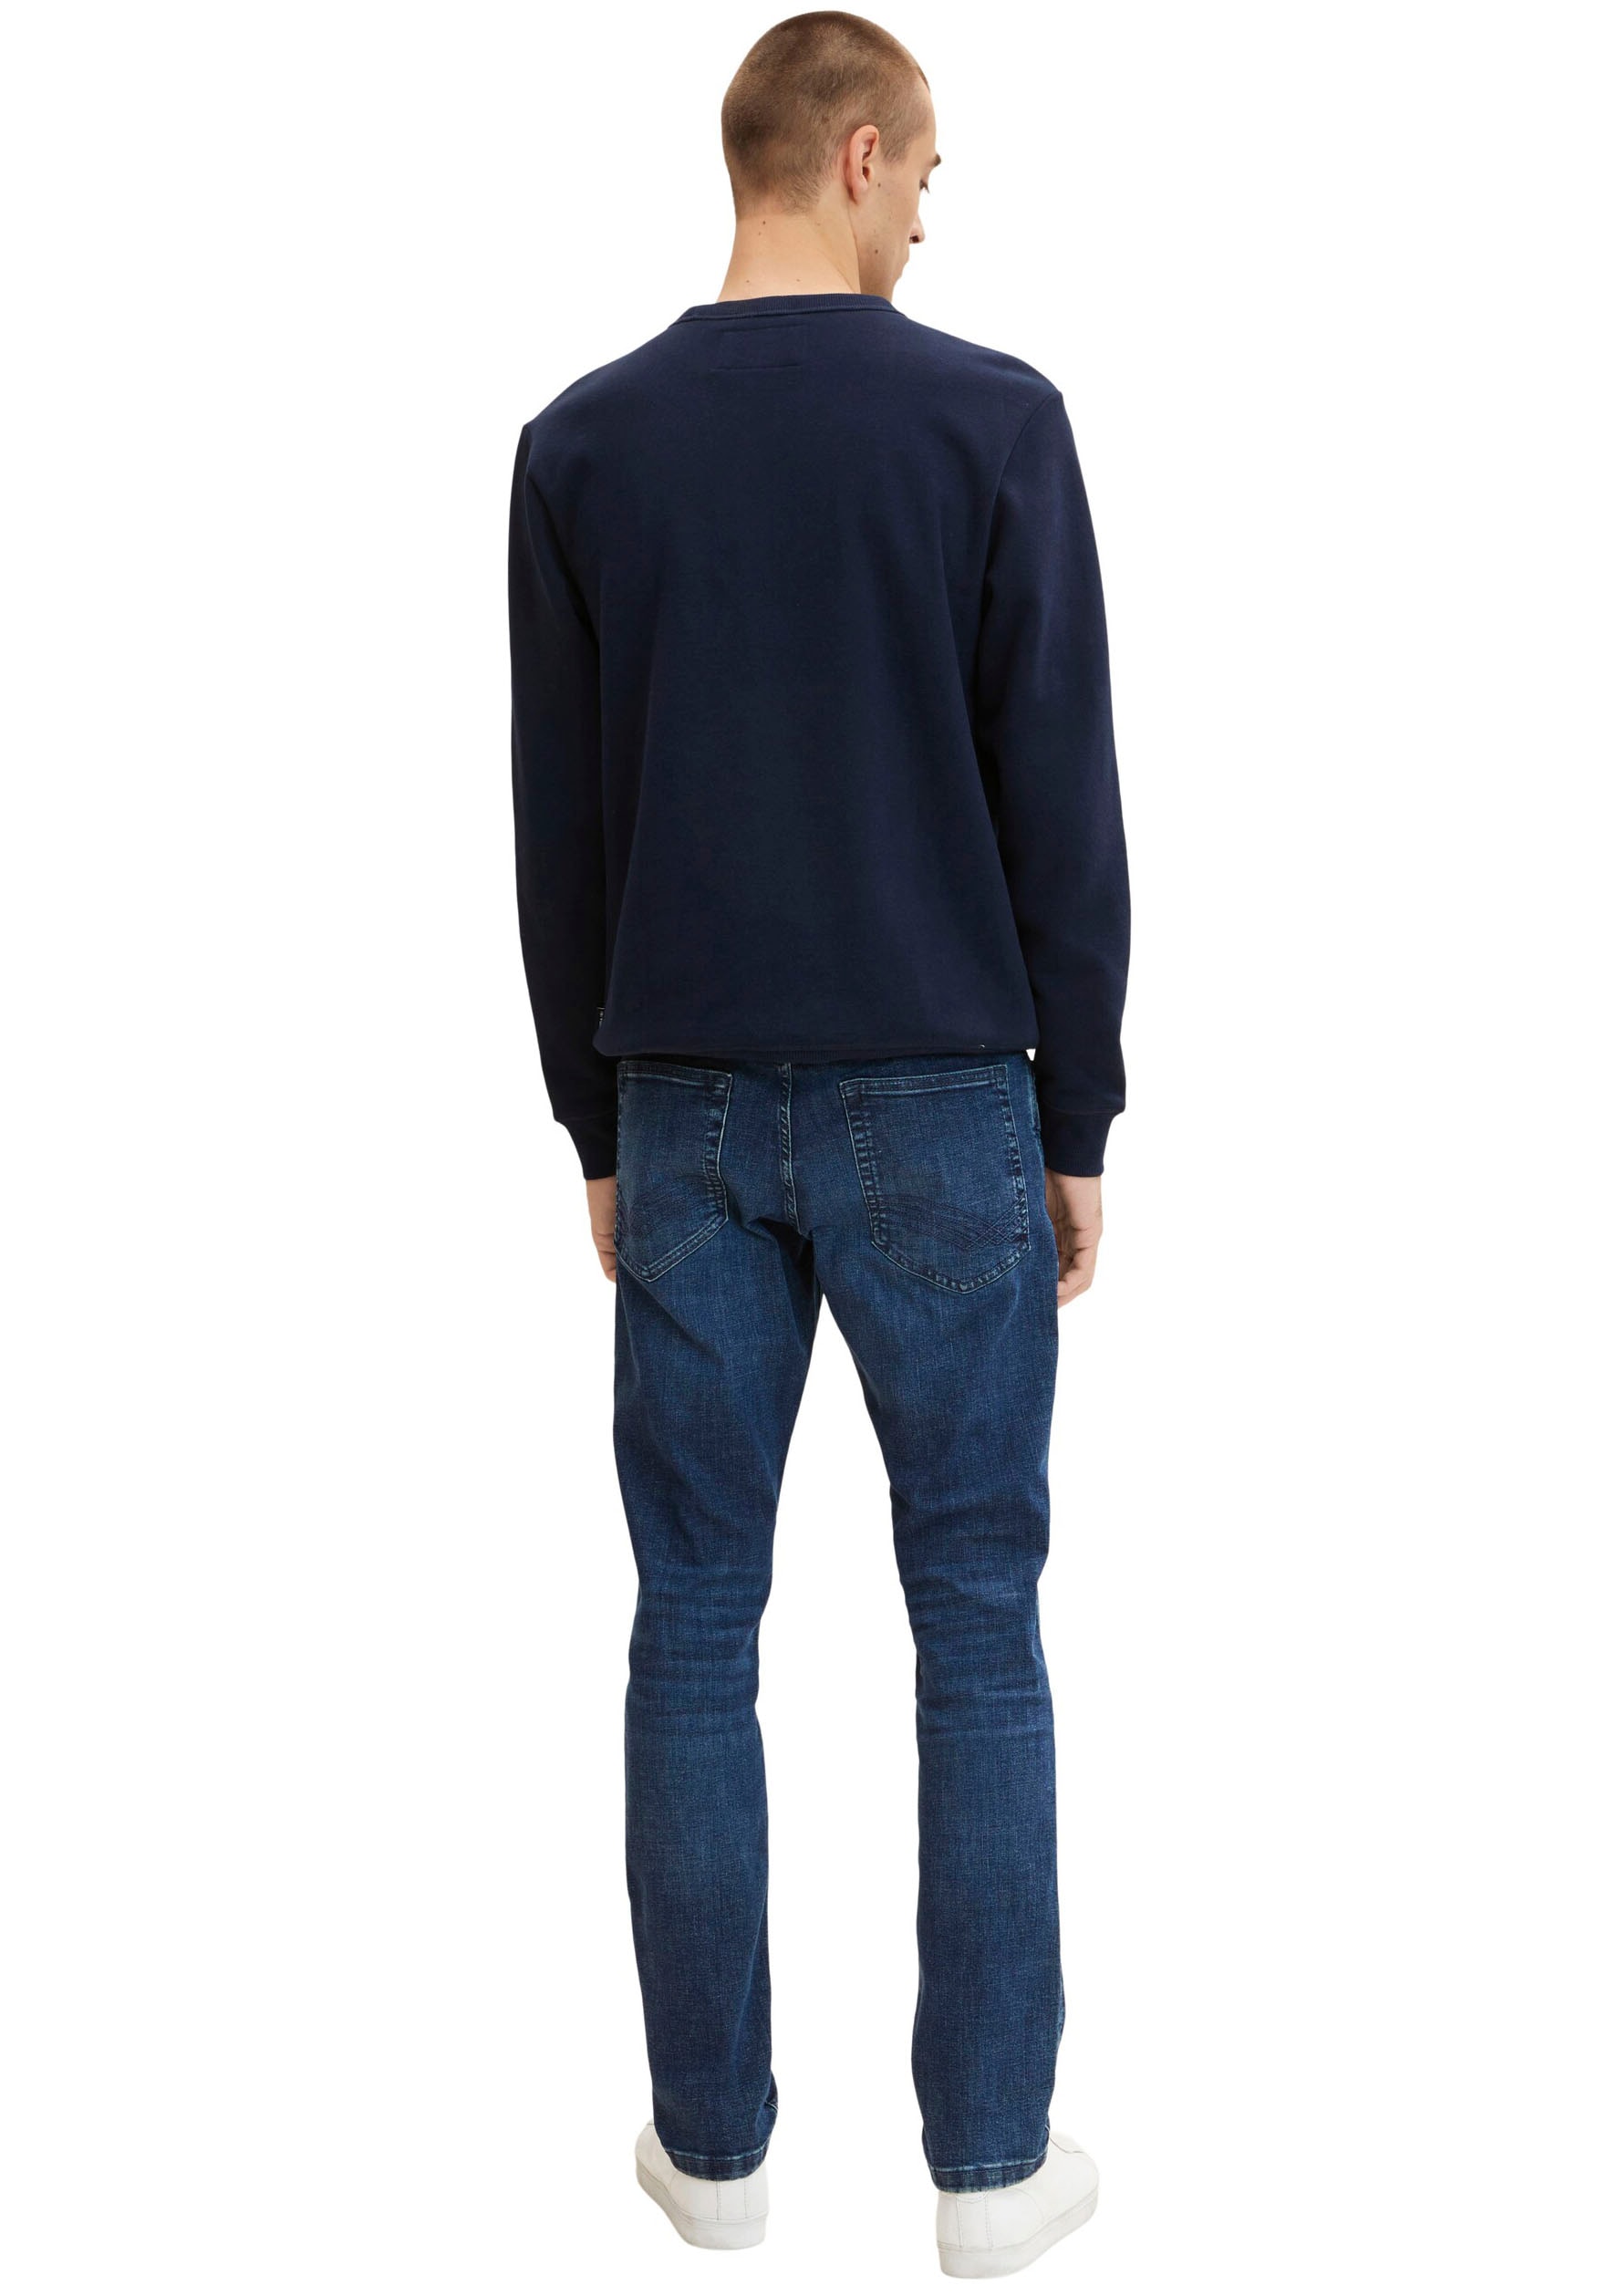 TOM TAILOR Slim-fit-Jeans »JOSH«, in lässiger Optik